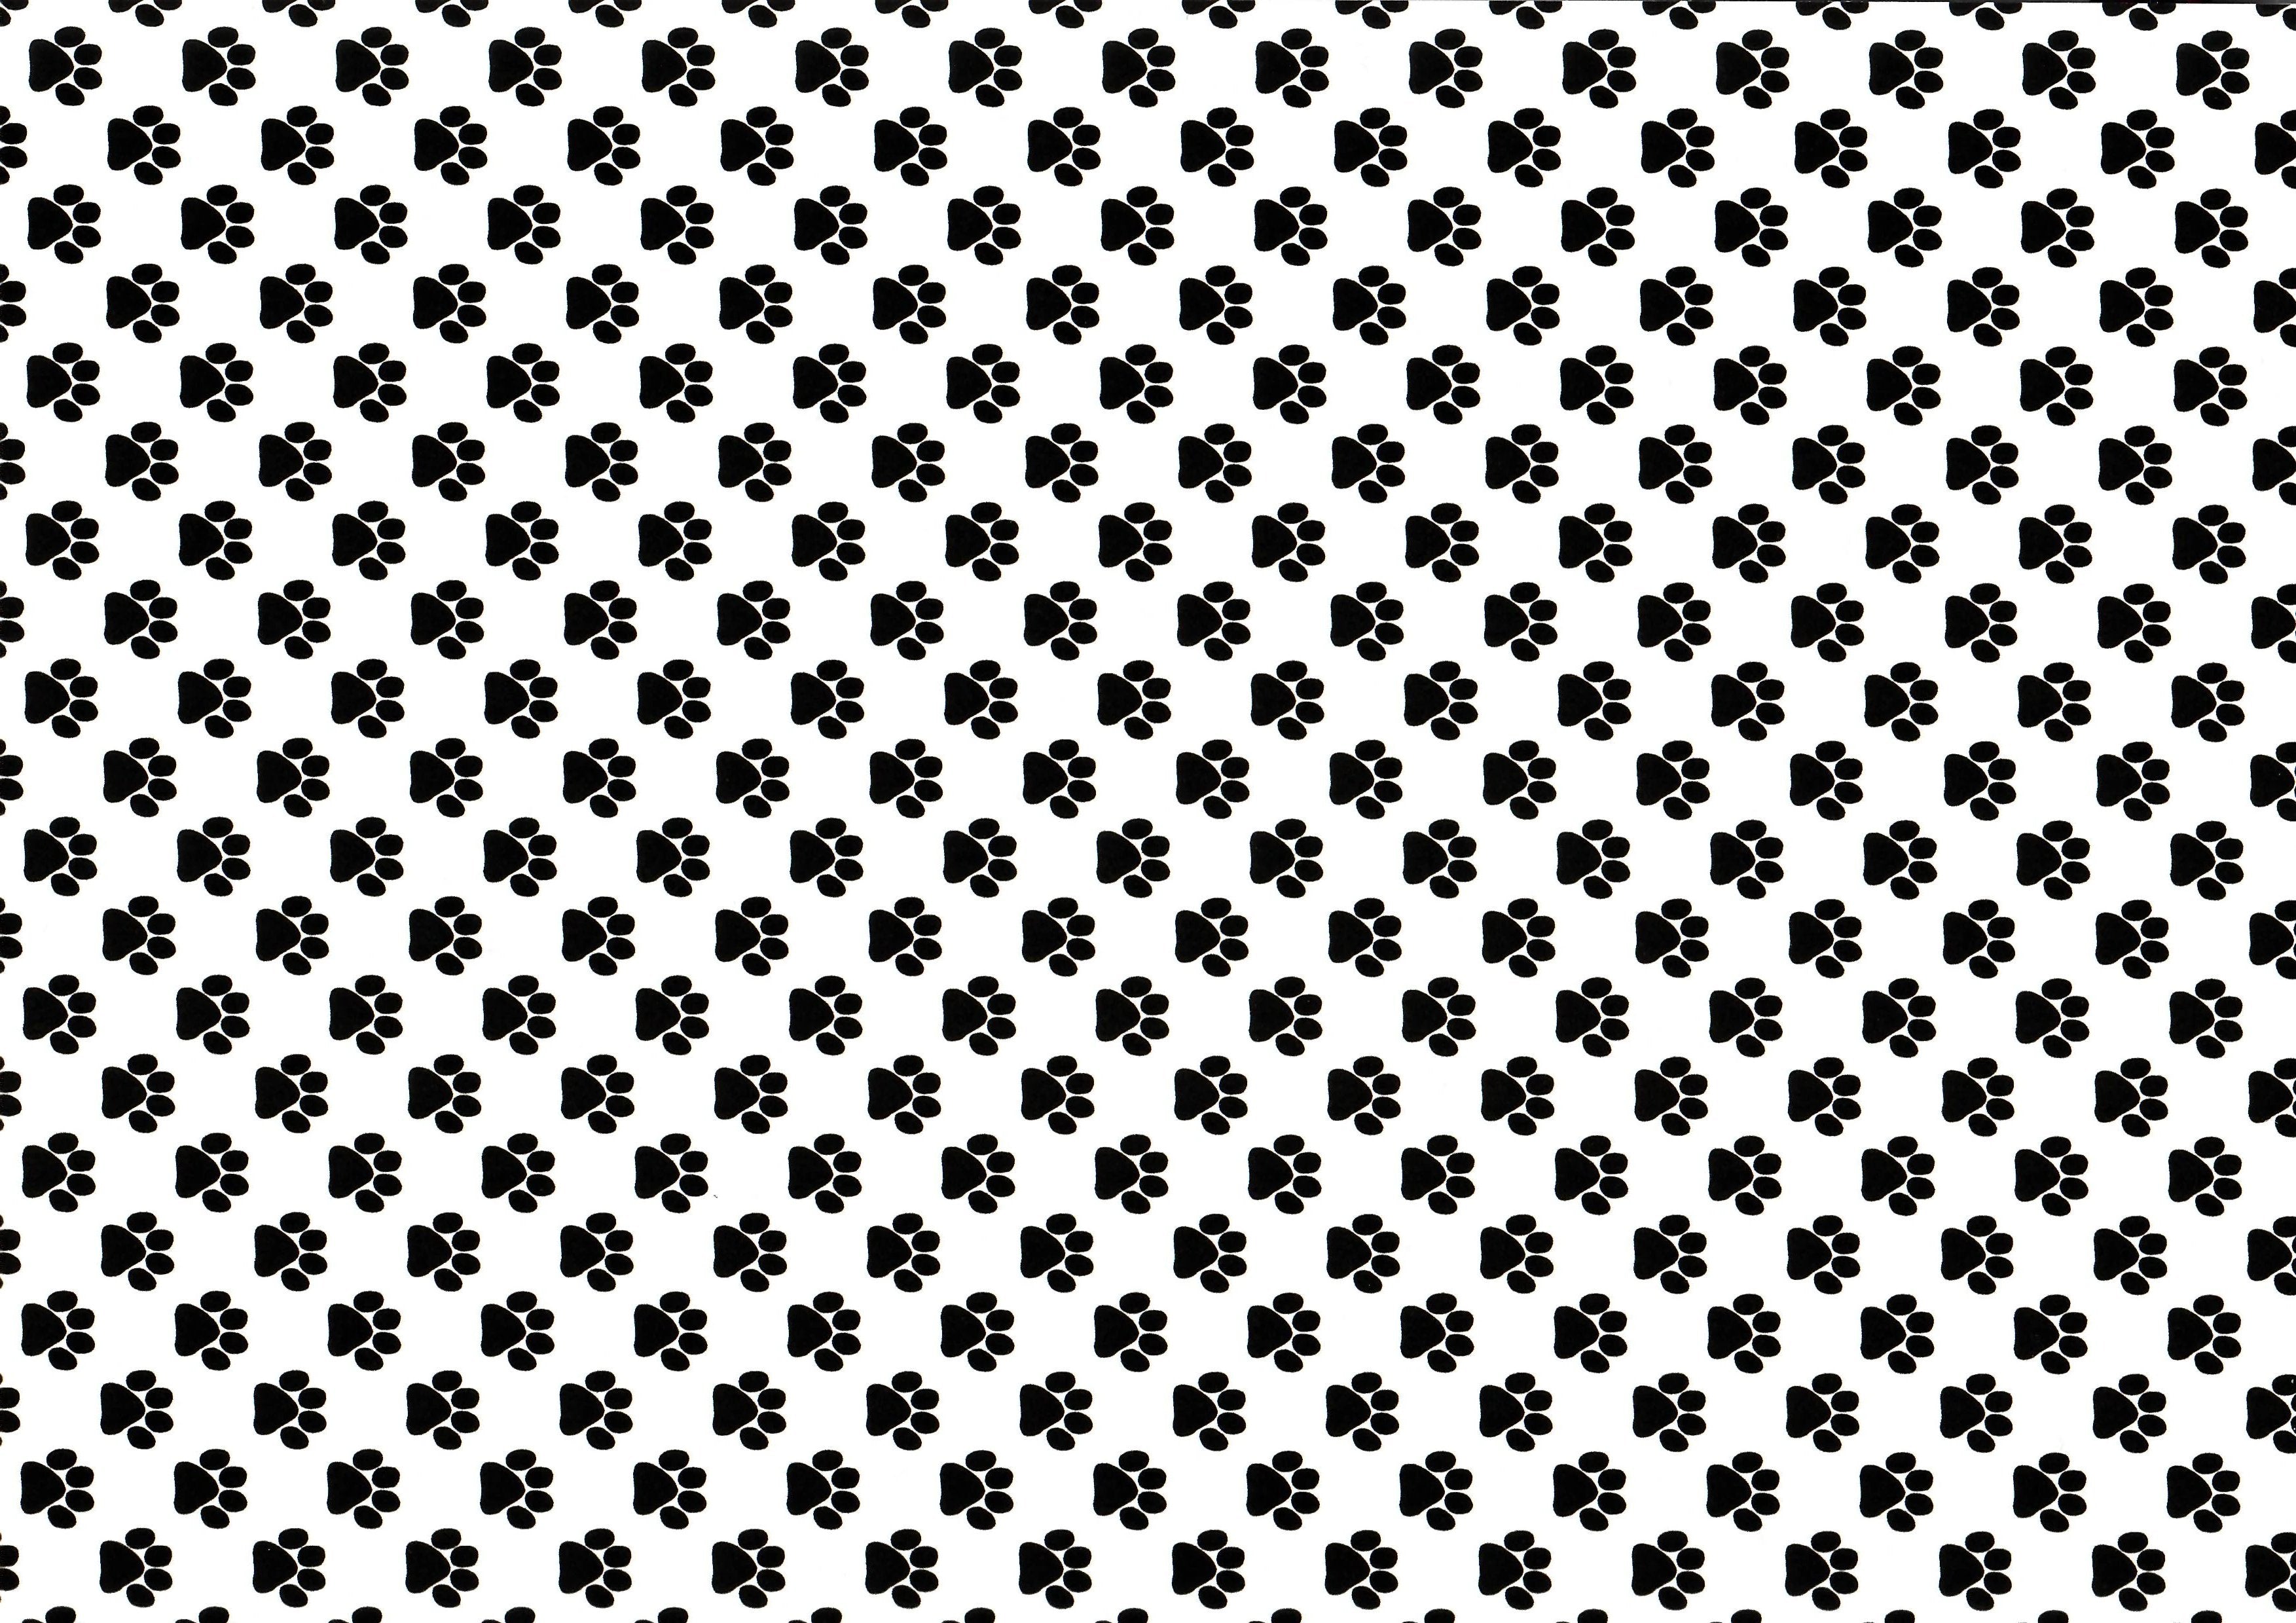 Black zebra patterned craft vinyl sheet - HTV / heat transfer vinyl 